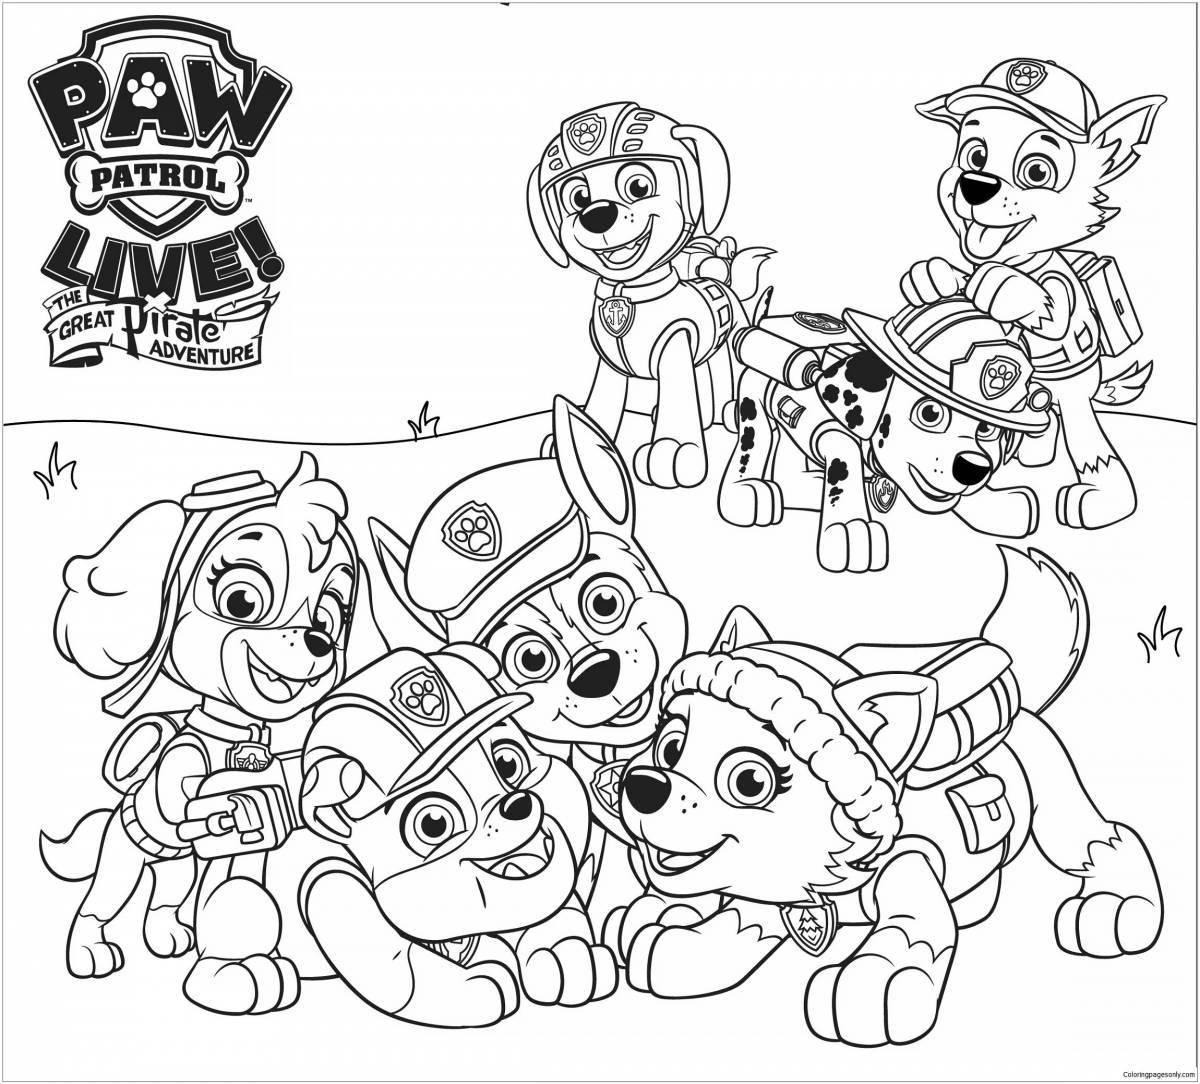 Puppy Patrol base coloring page